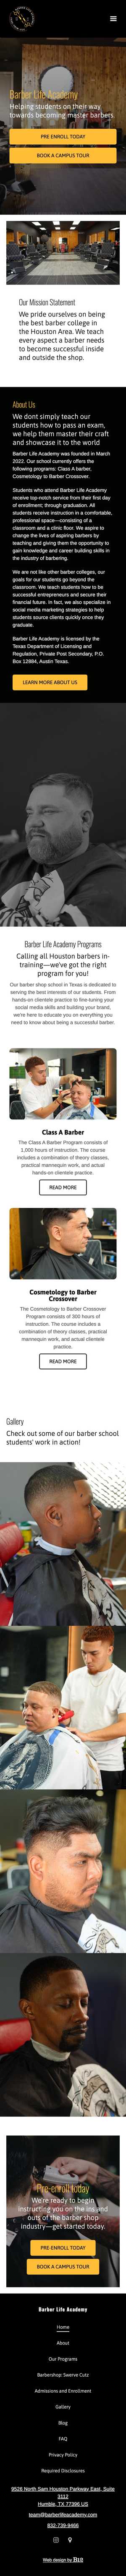 Barber Life Academy